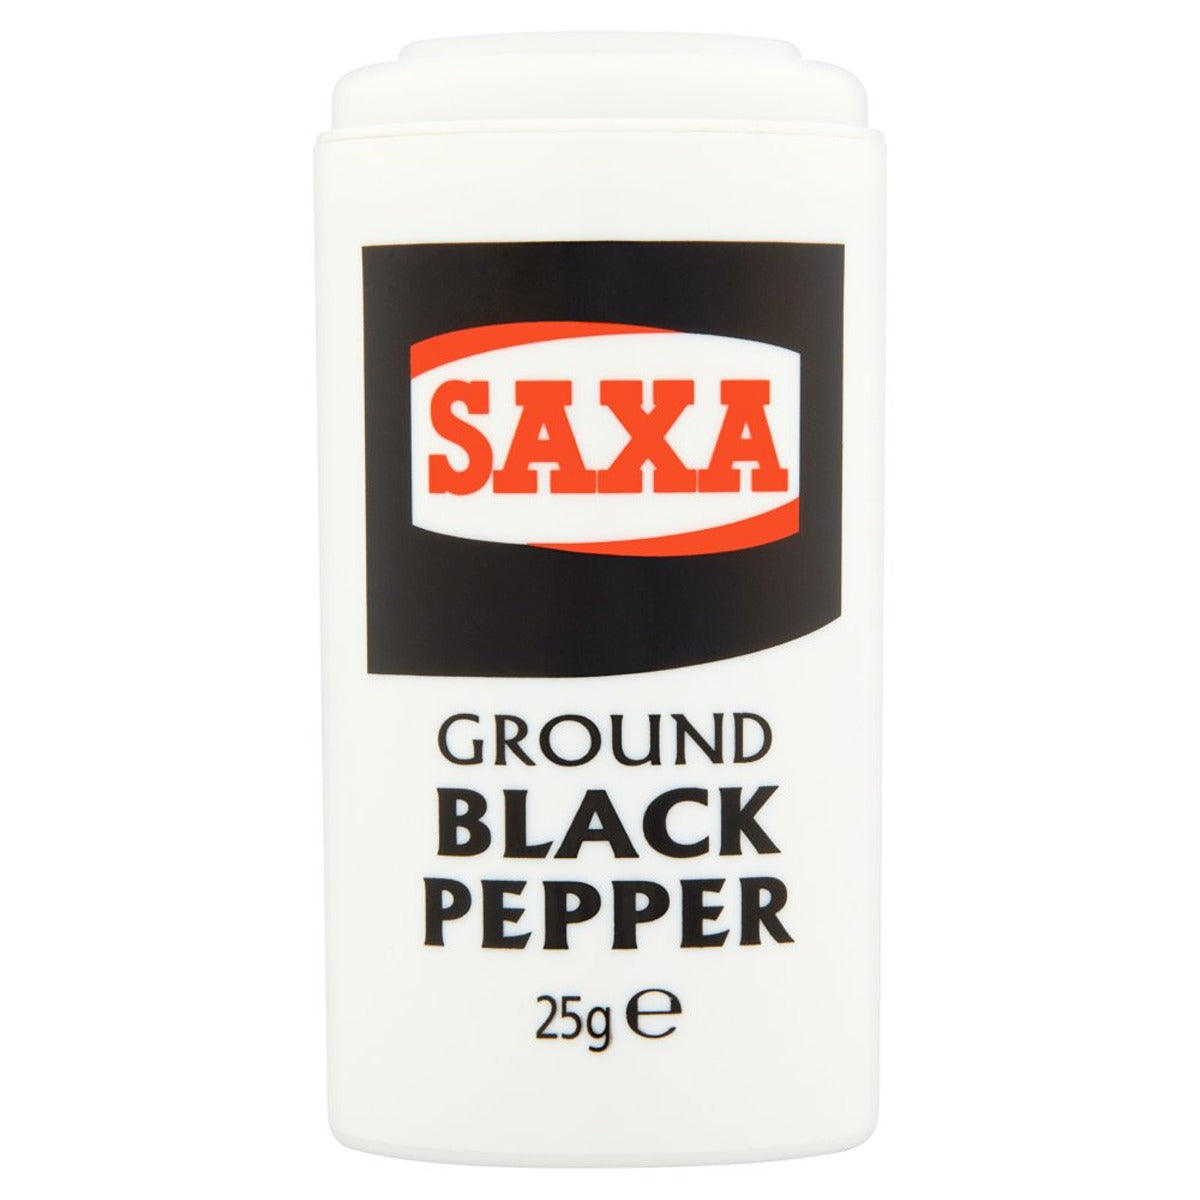 Saxa - Ground Black Pepper - 25g - Continental Food Store